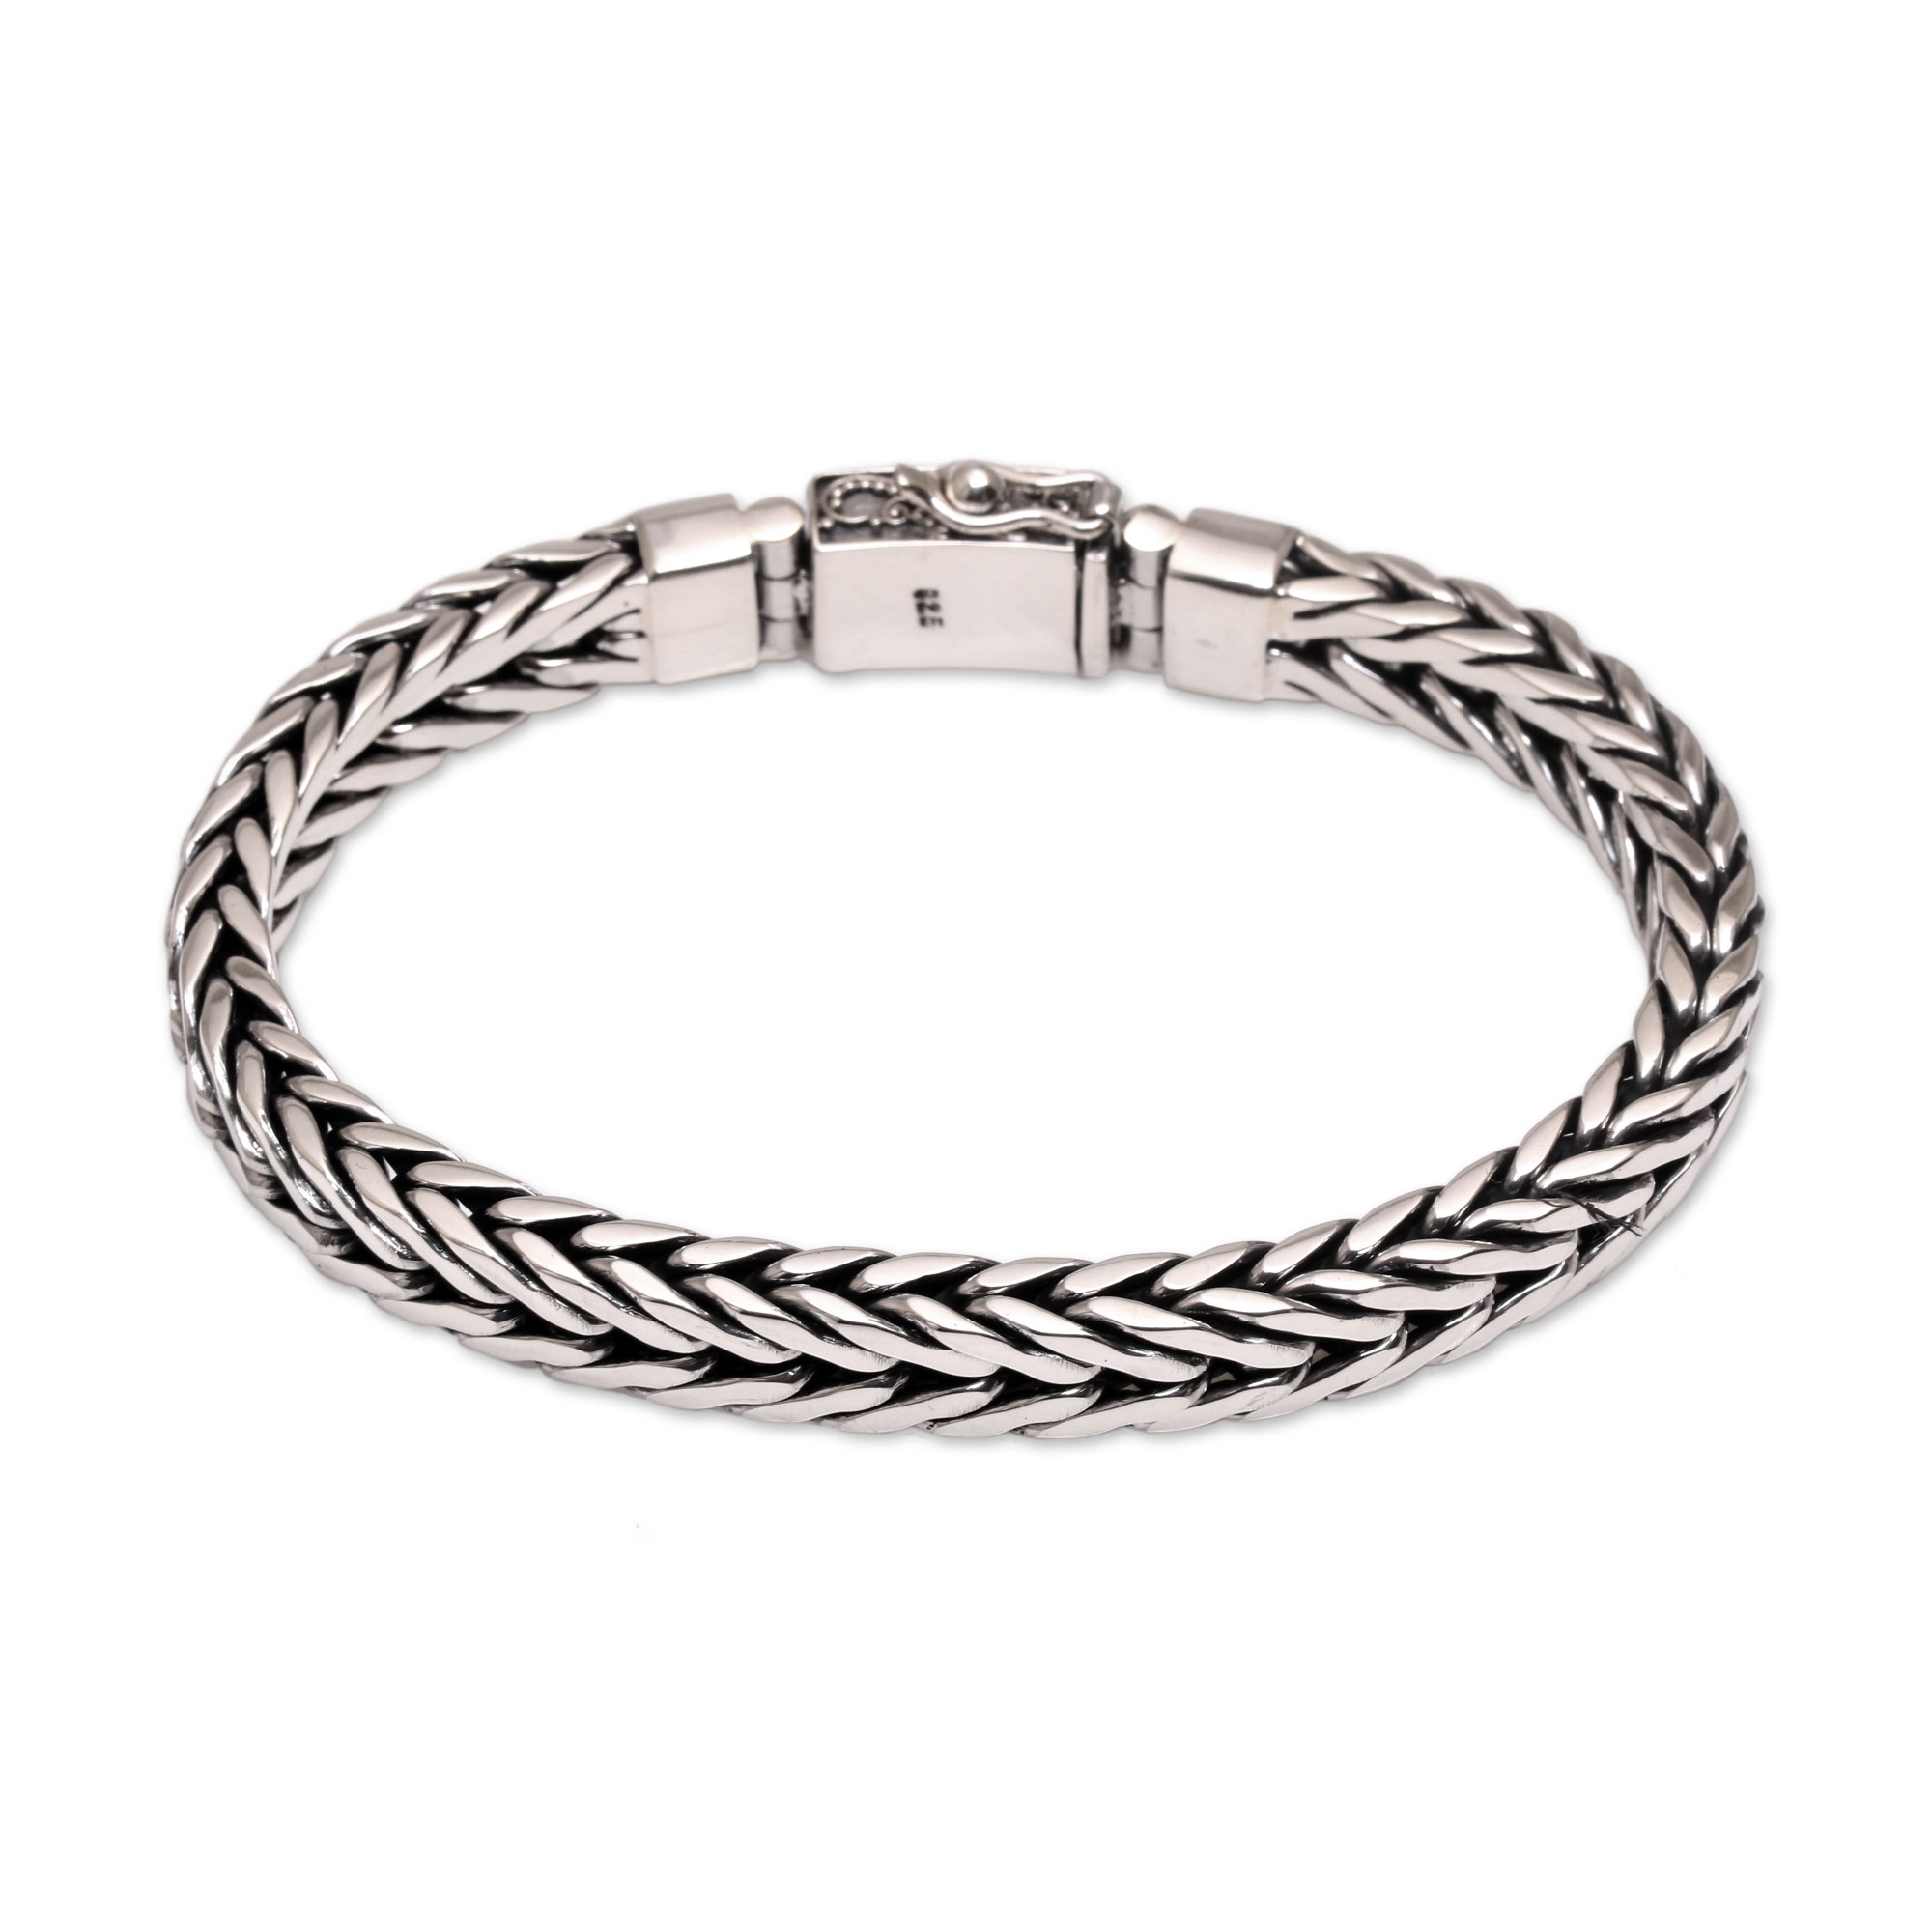 Sterling Silver Naga Chain Bracelet from Bali - Shining Naga | NOVICA